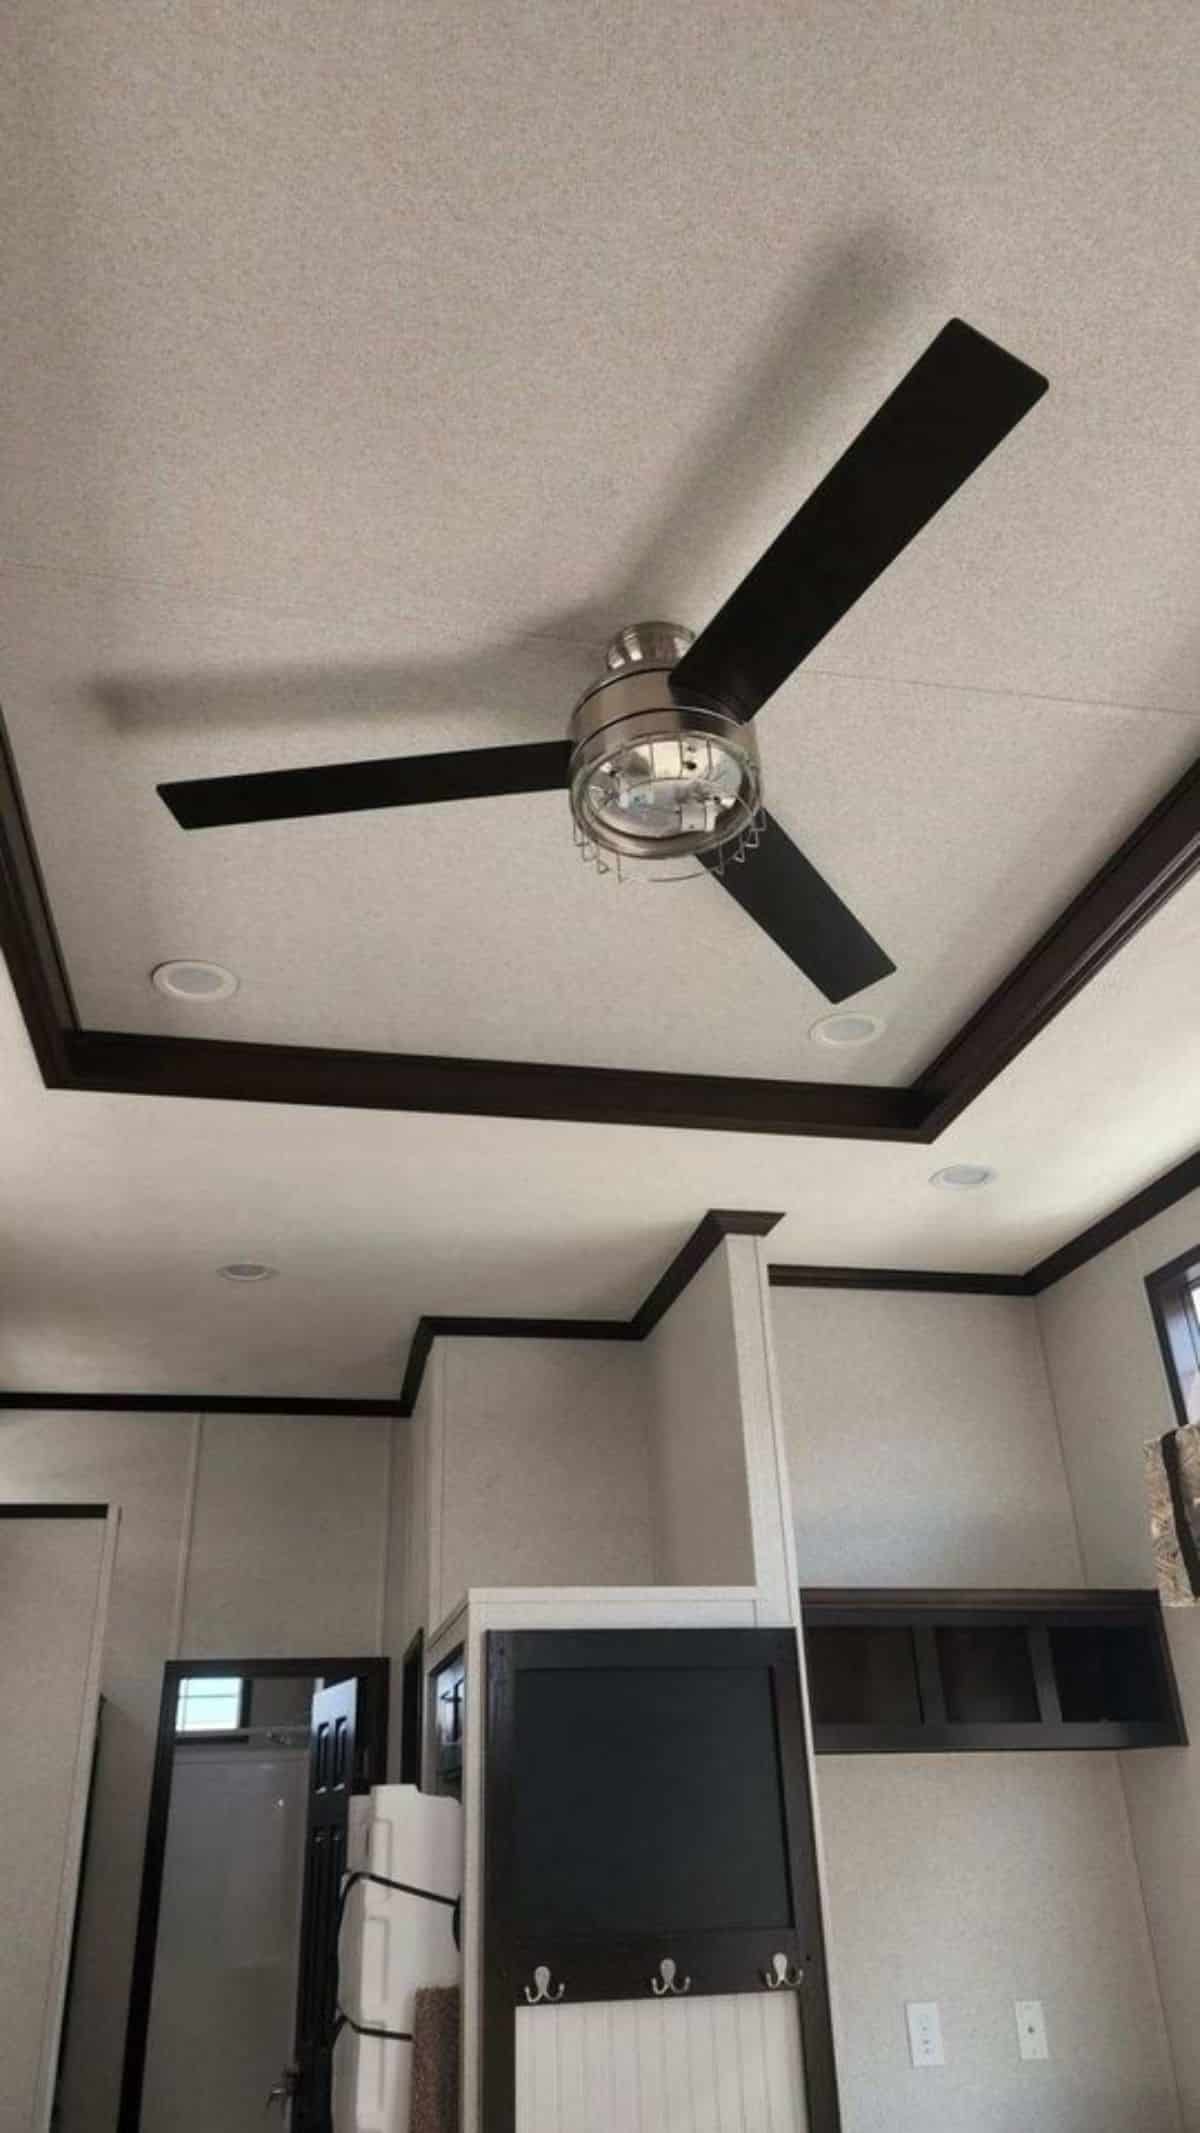 Huge fan is installed in the living area